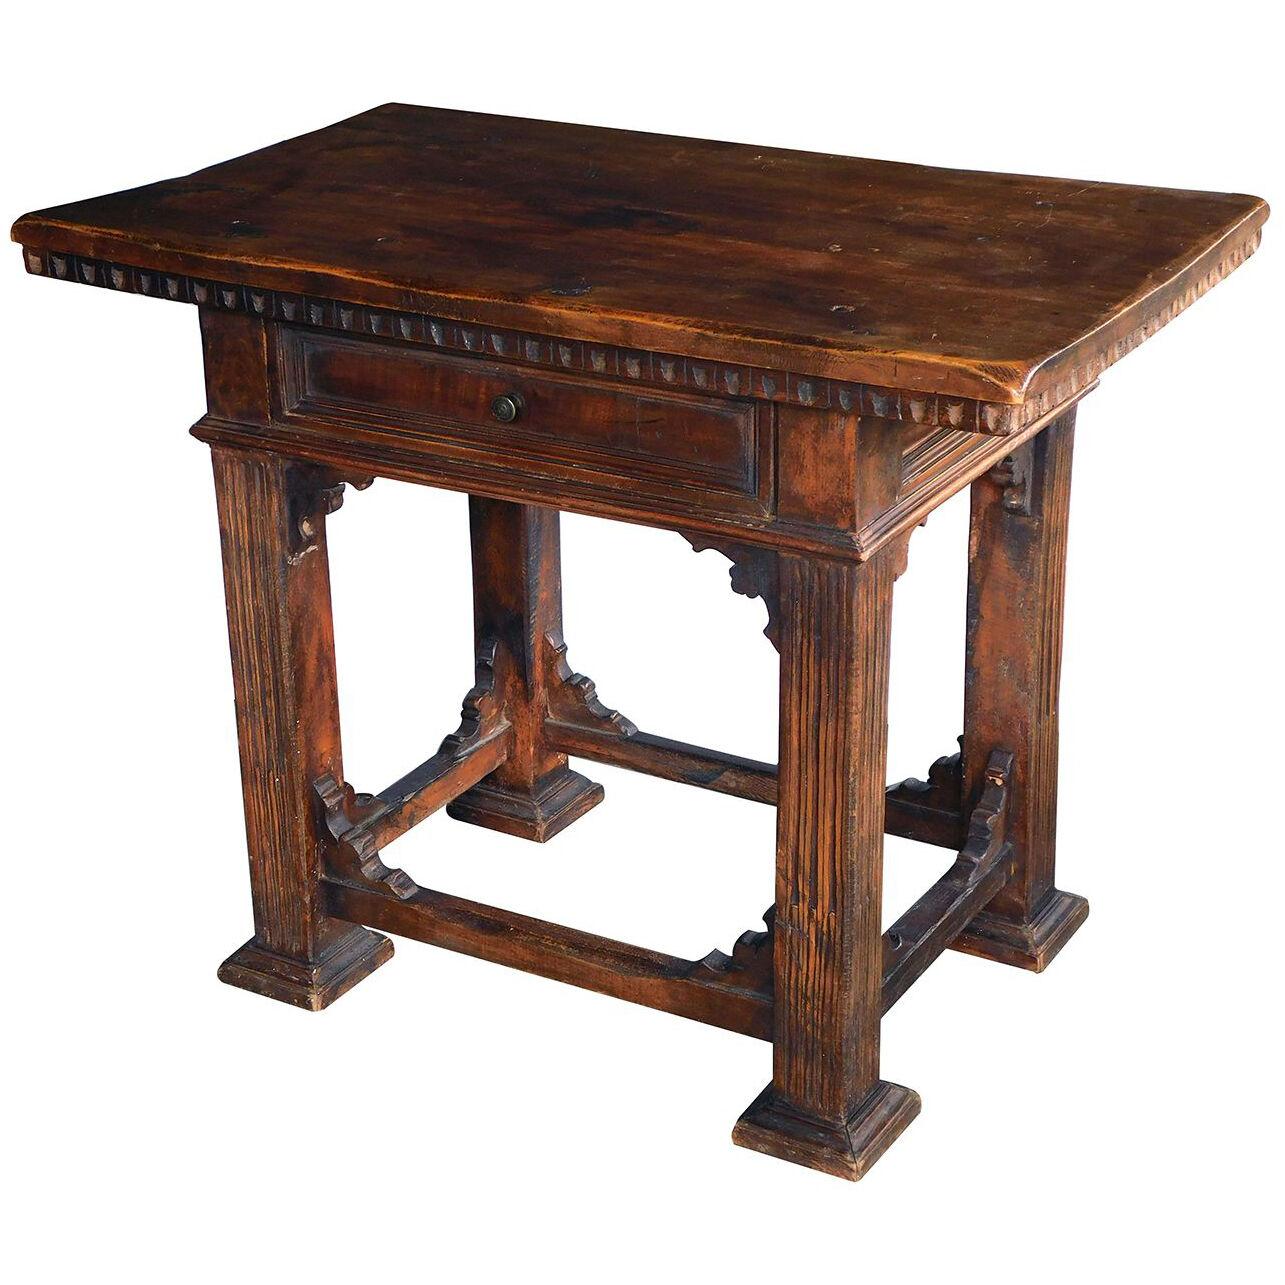 Rustic Italian baroque style walnut single-drawer side table